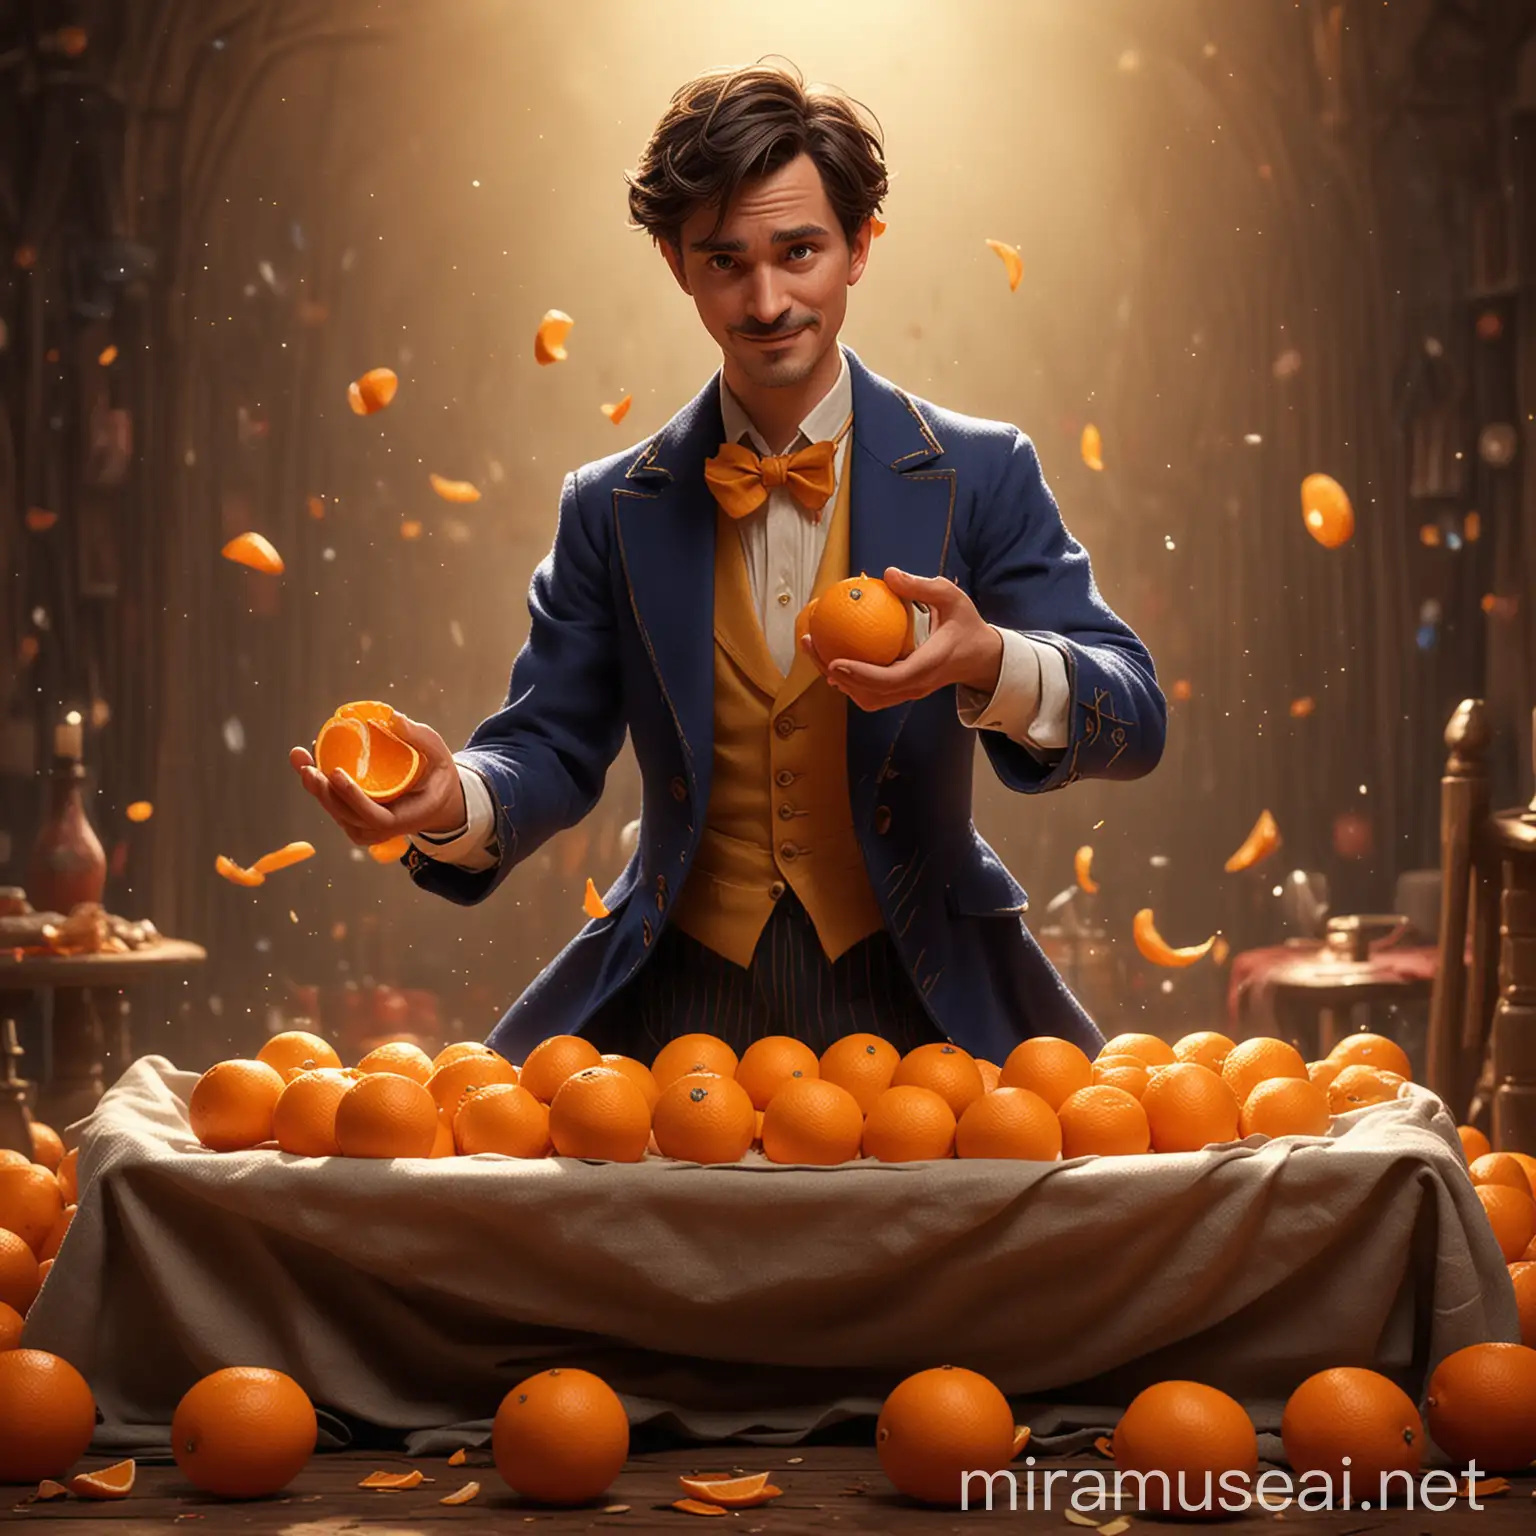 Magicians Marvel Oranges Appear in Disney Pixar Style